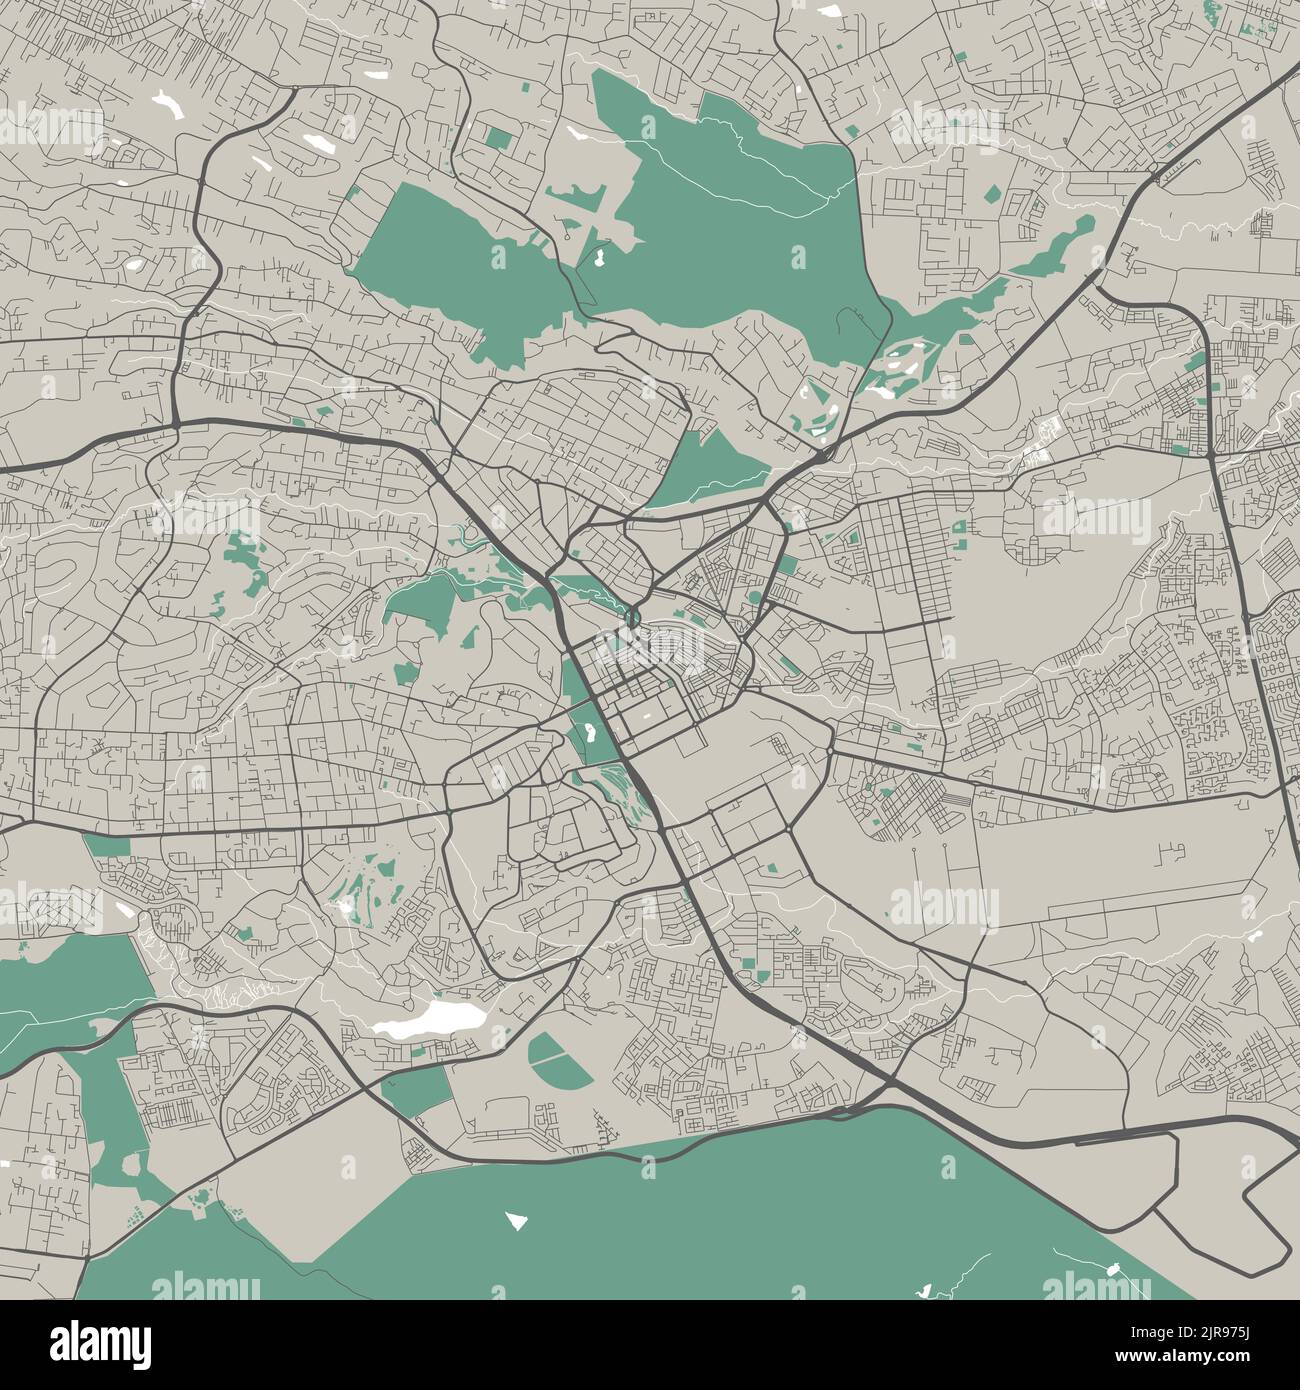 Mappa vettoriale di Nairobi, Kenya. Città urbana in Kenya, America. Illustrazione del poster della mappa stradale. Mappa di Nairobi art. Illustrazione Vettoriale